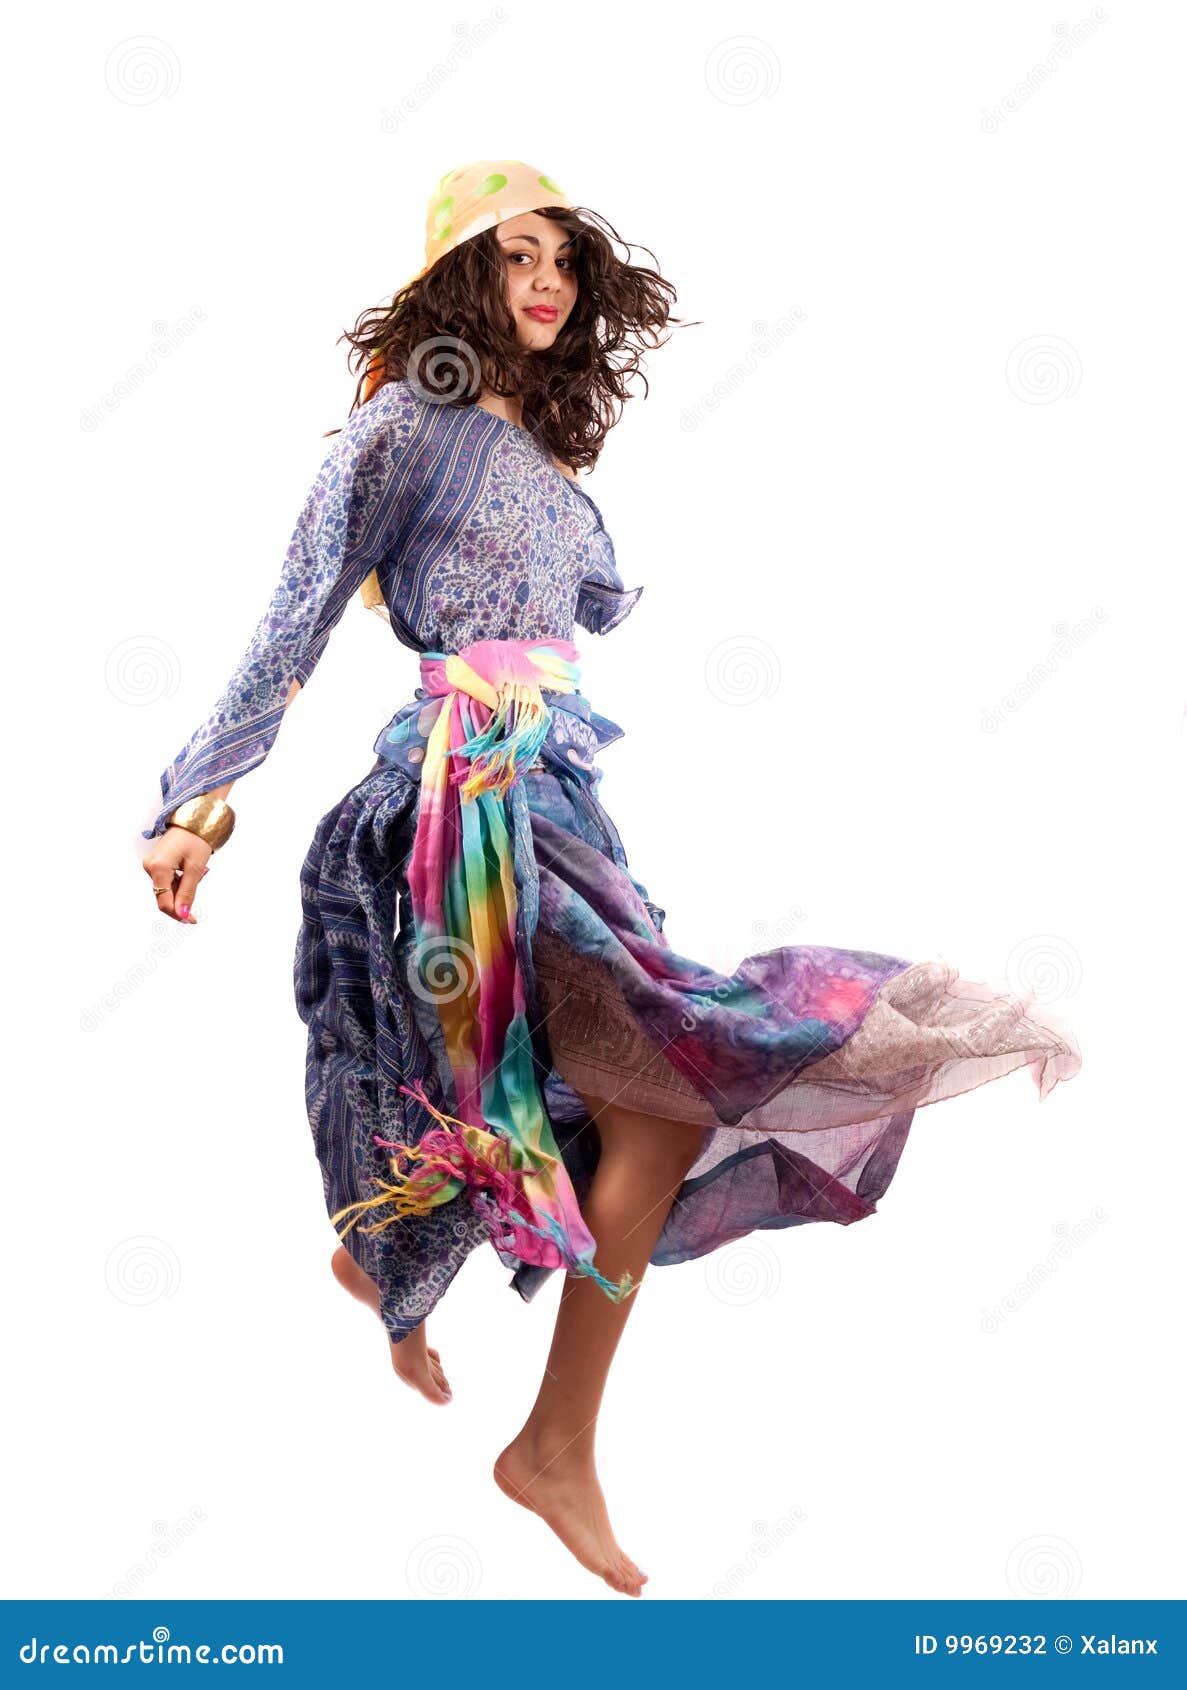 http://thumbs.dreamstime.com/z/pretty-gipsy-lady-retro-colorful-dress-dancing-9969232.jpg